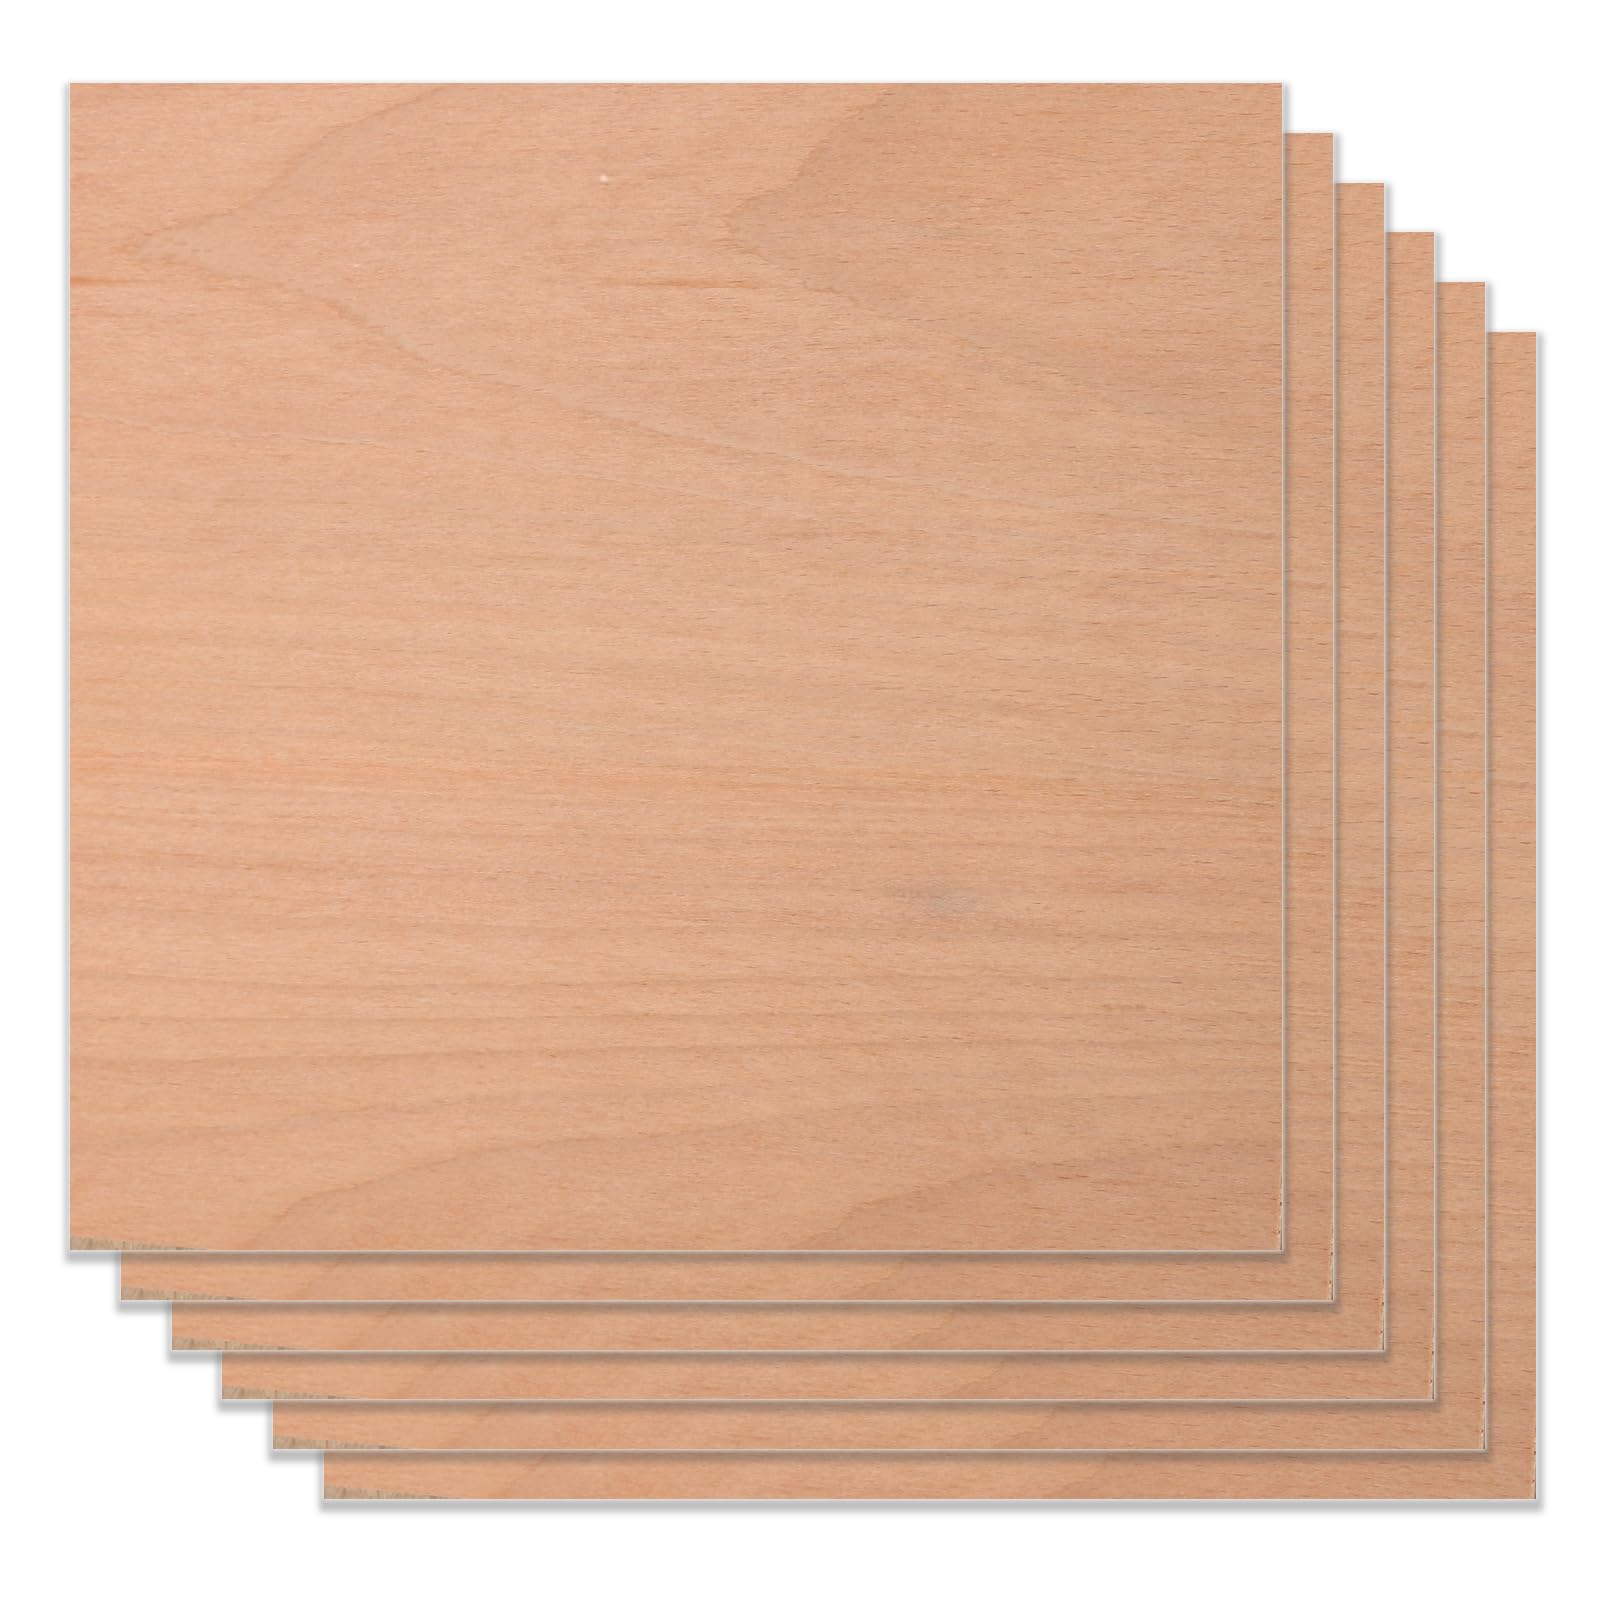 Bastelholzplatte Sperrholz Platten, 6 Stück rotes Buchensperrholz, 0,3 x 30,5 x 30,5 cm, Bubinga, unlackiertes Holz für Bastelarbeiten, CNC-Schneiden, Malen